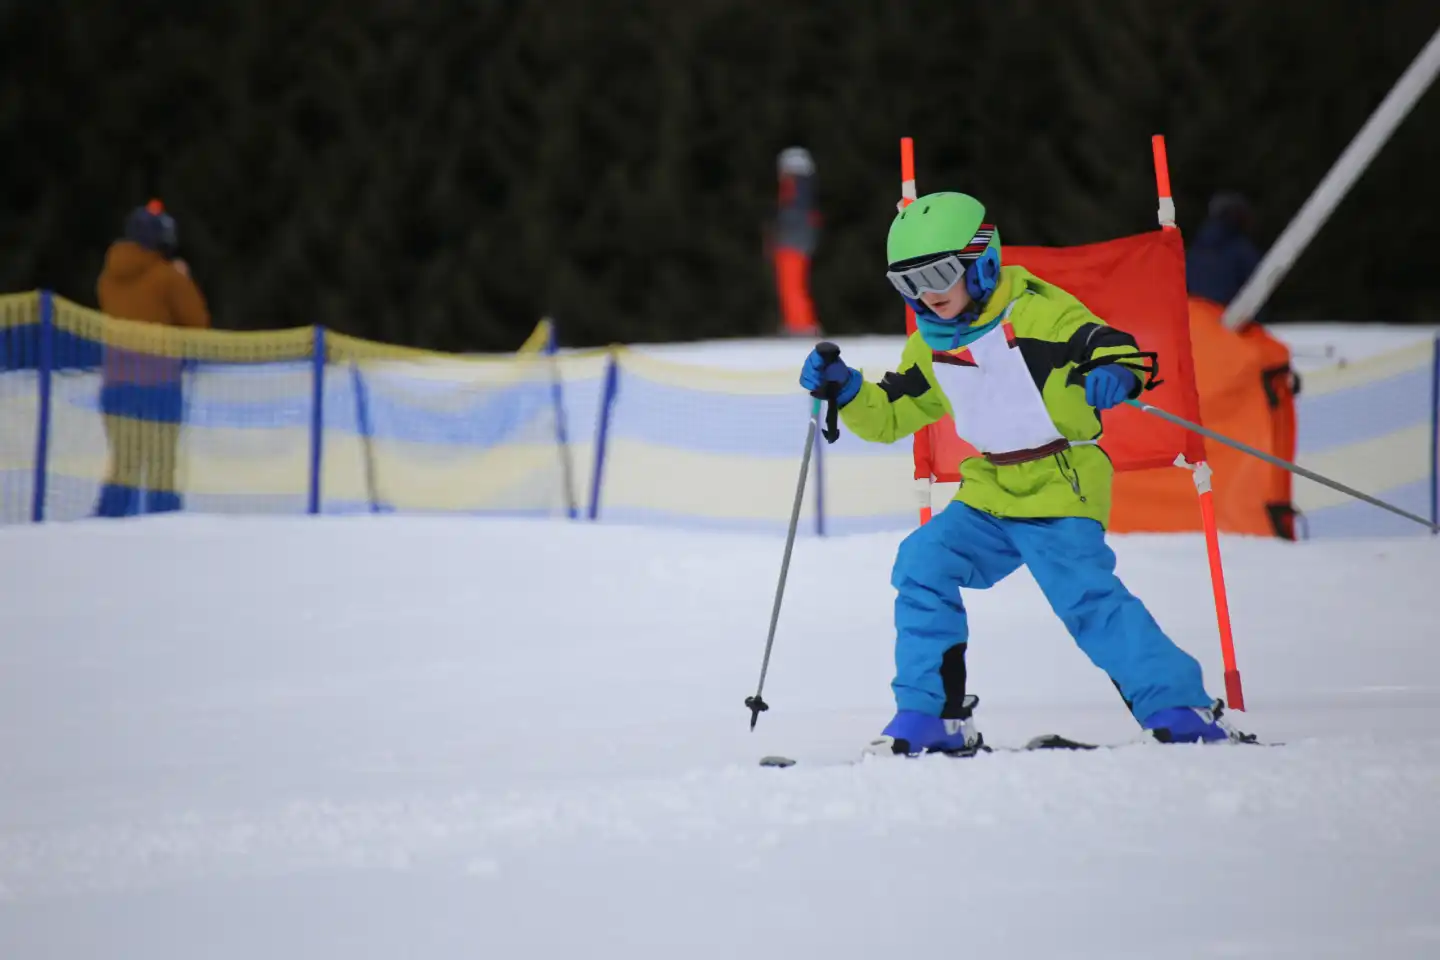 Child at a guest ski race at a ski resort